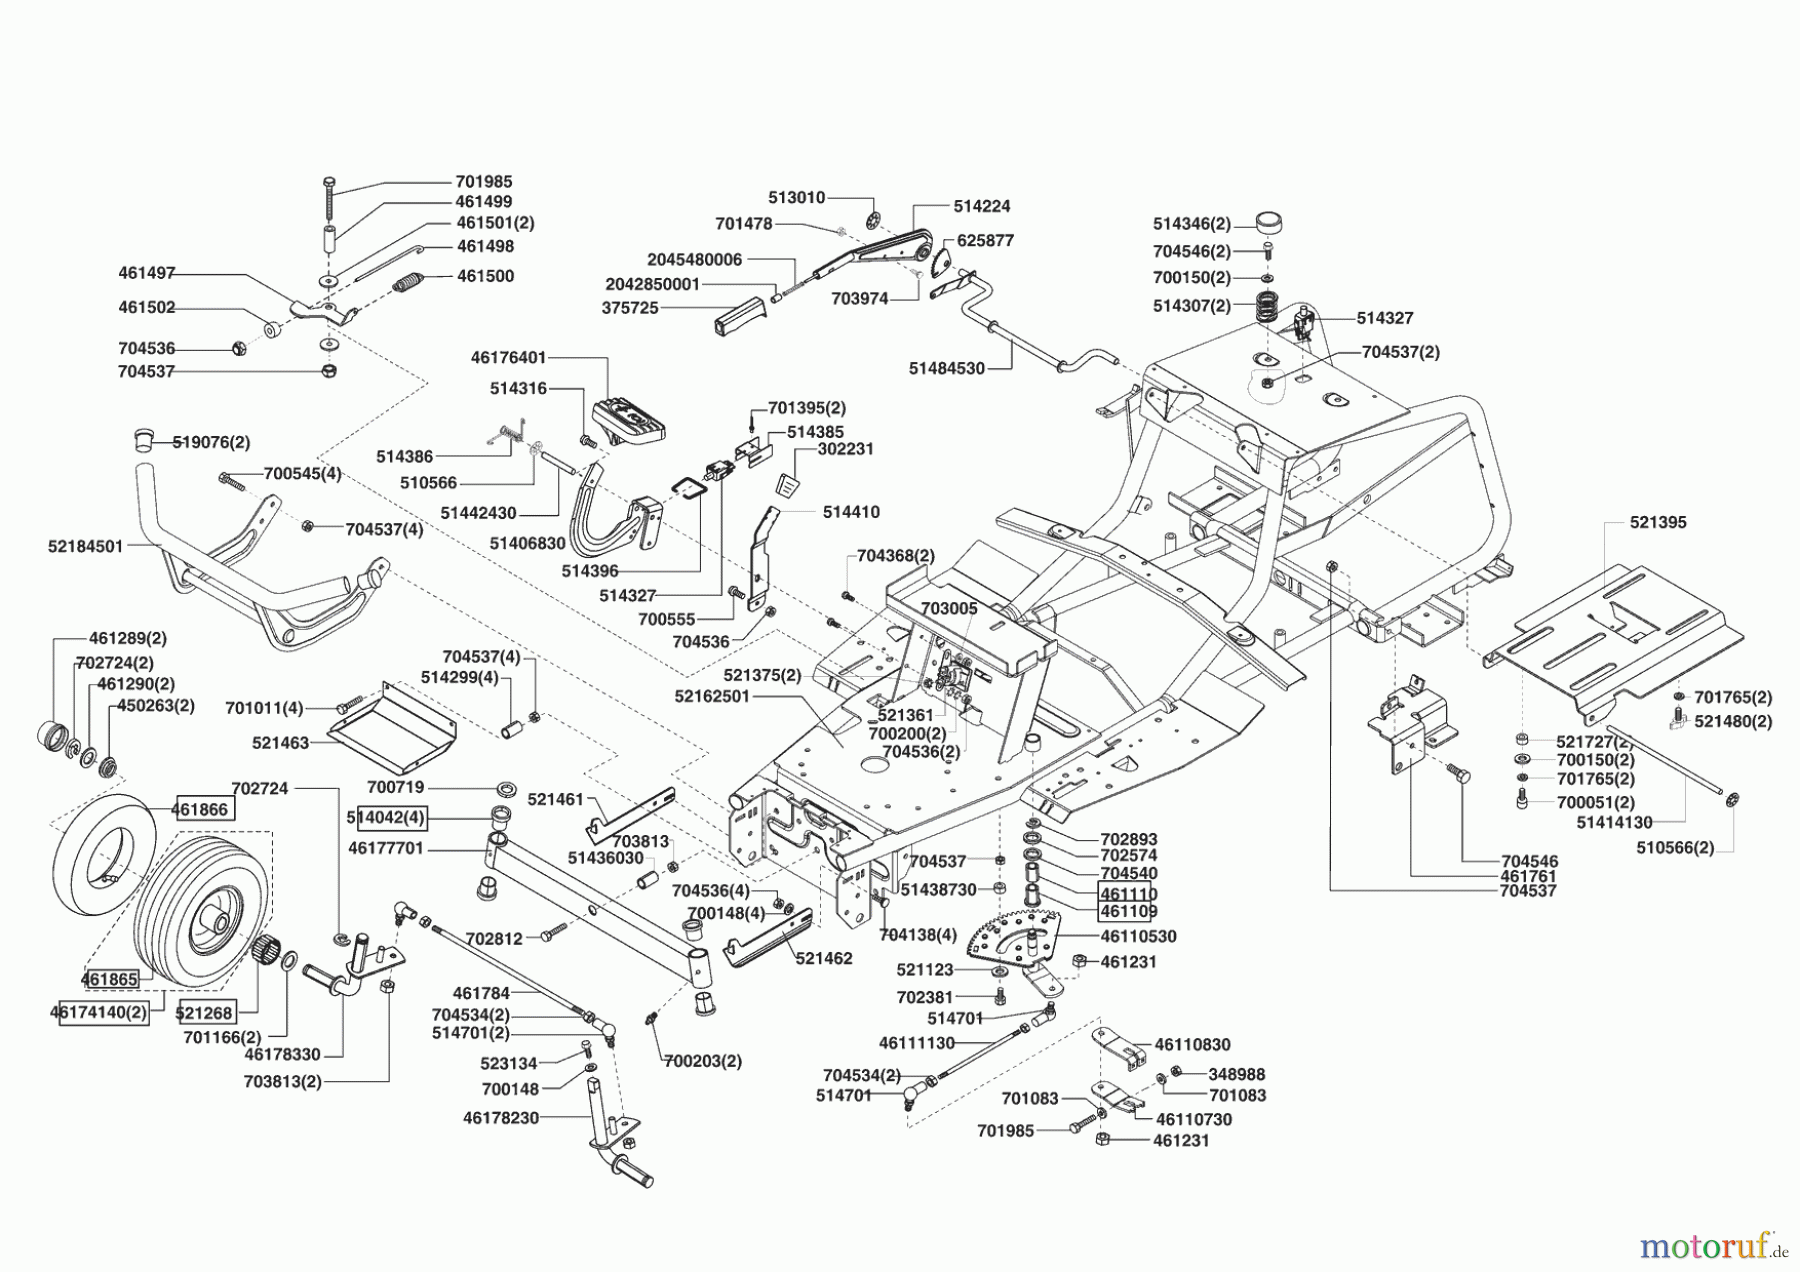  AL-KO Gartentechnik Rasentraktor T18-102 HDE EDEN PARC Seite 2